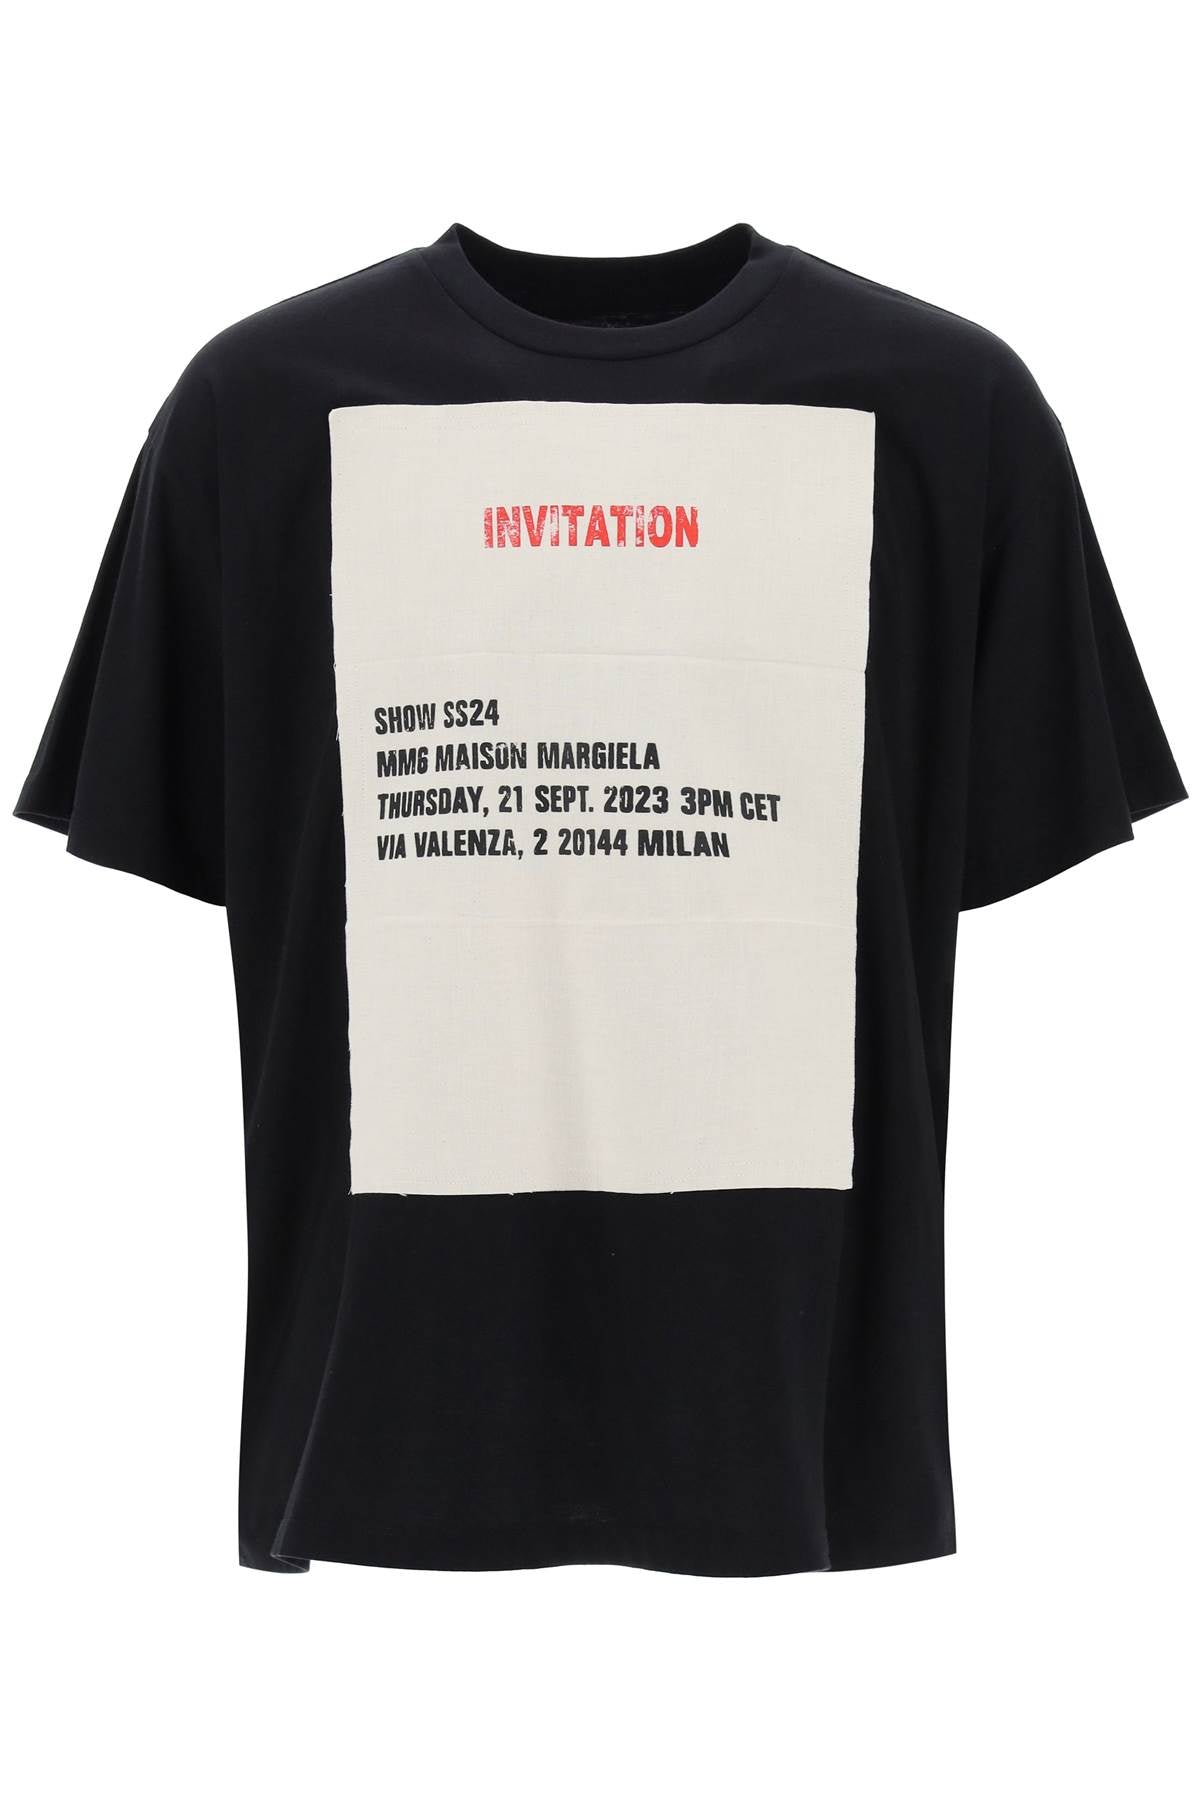 Mm6 maison margiela invitation print t-shirt with